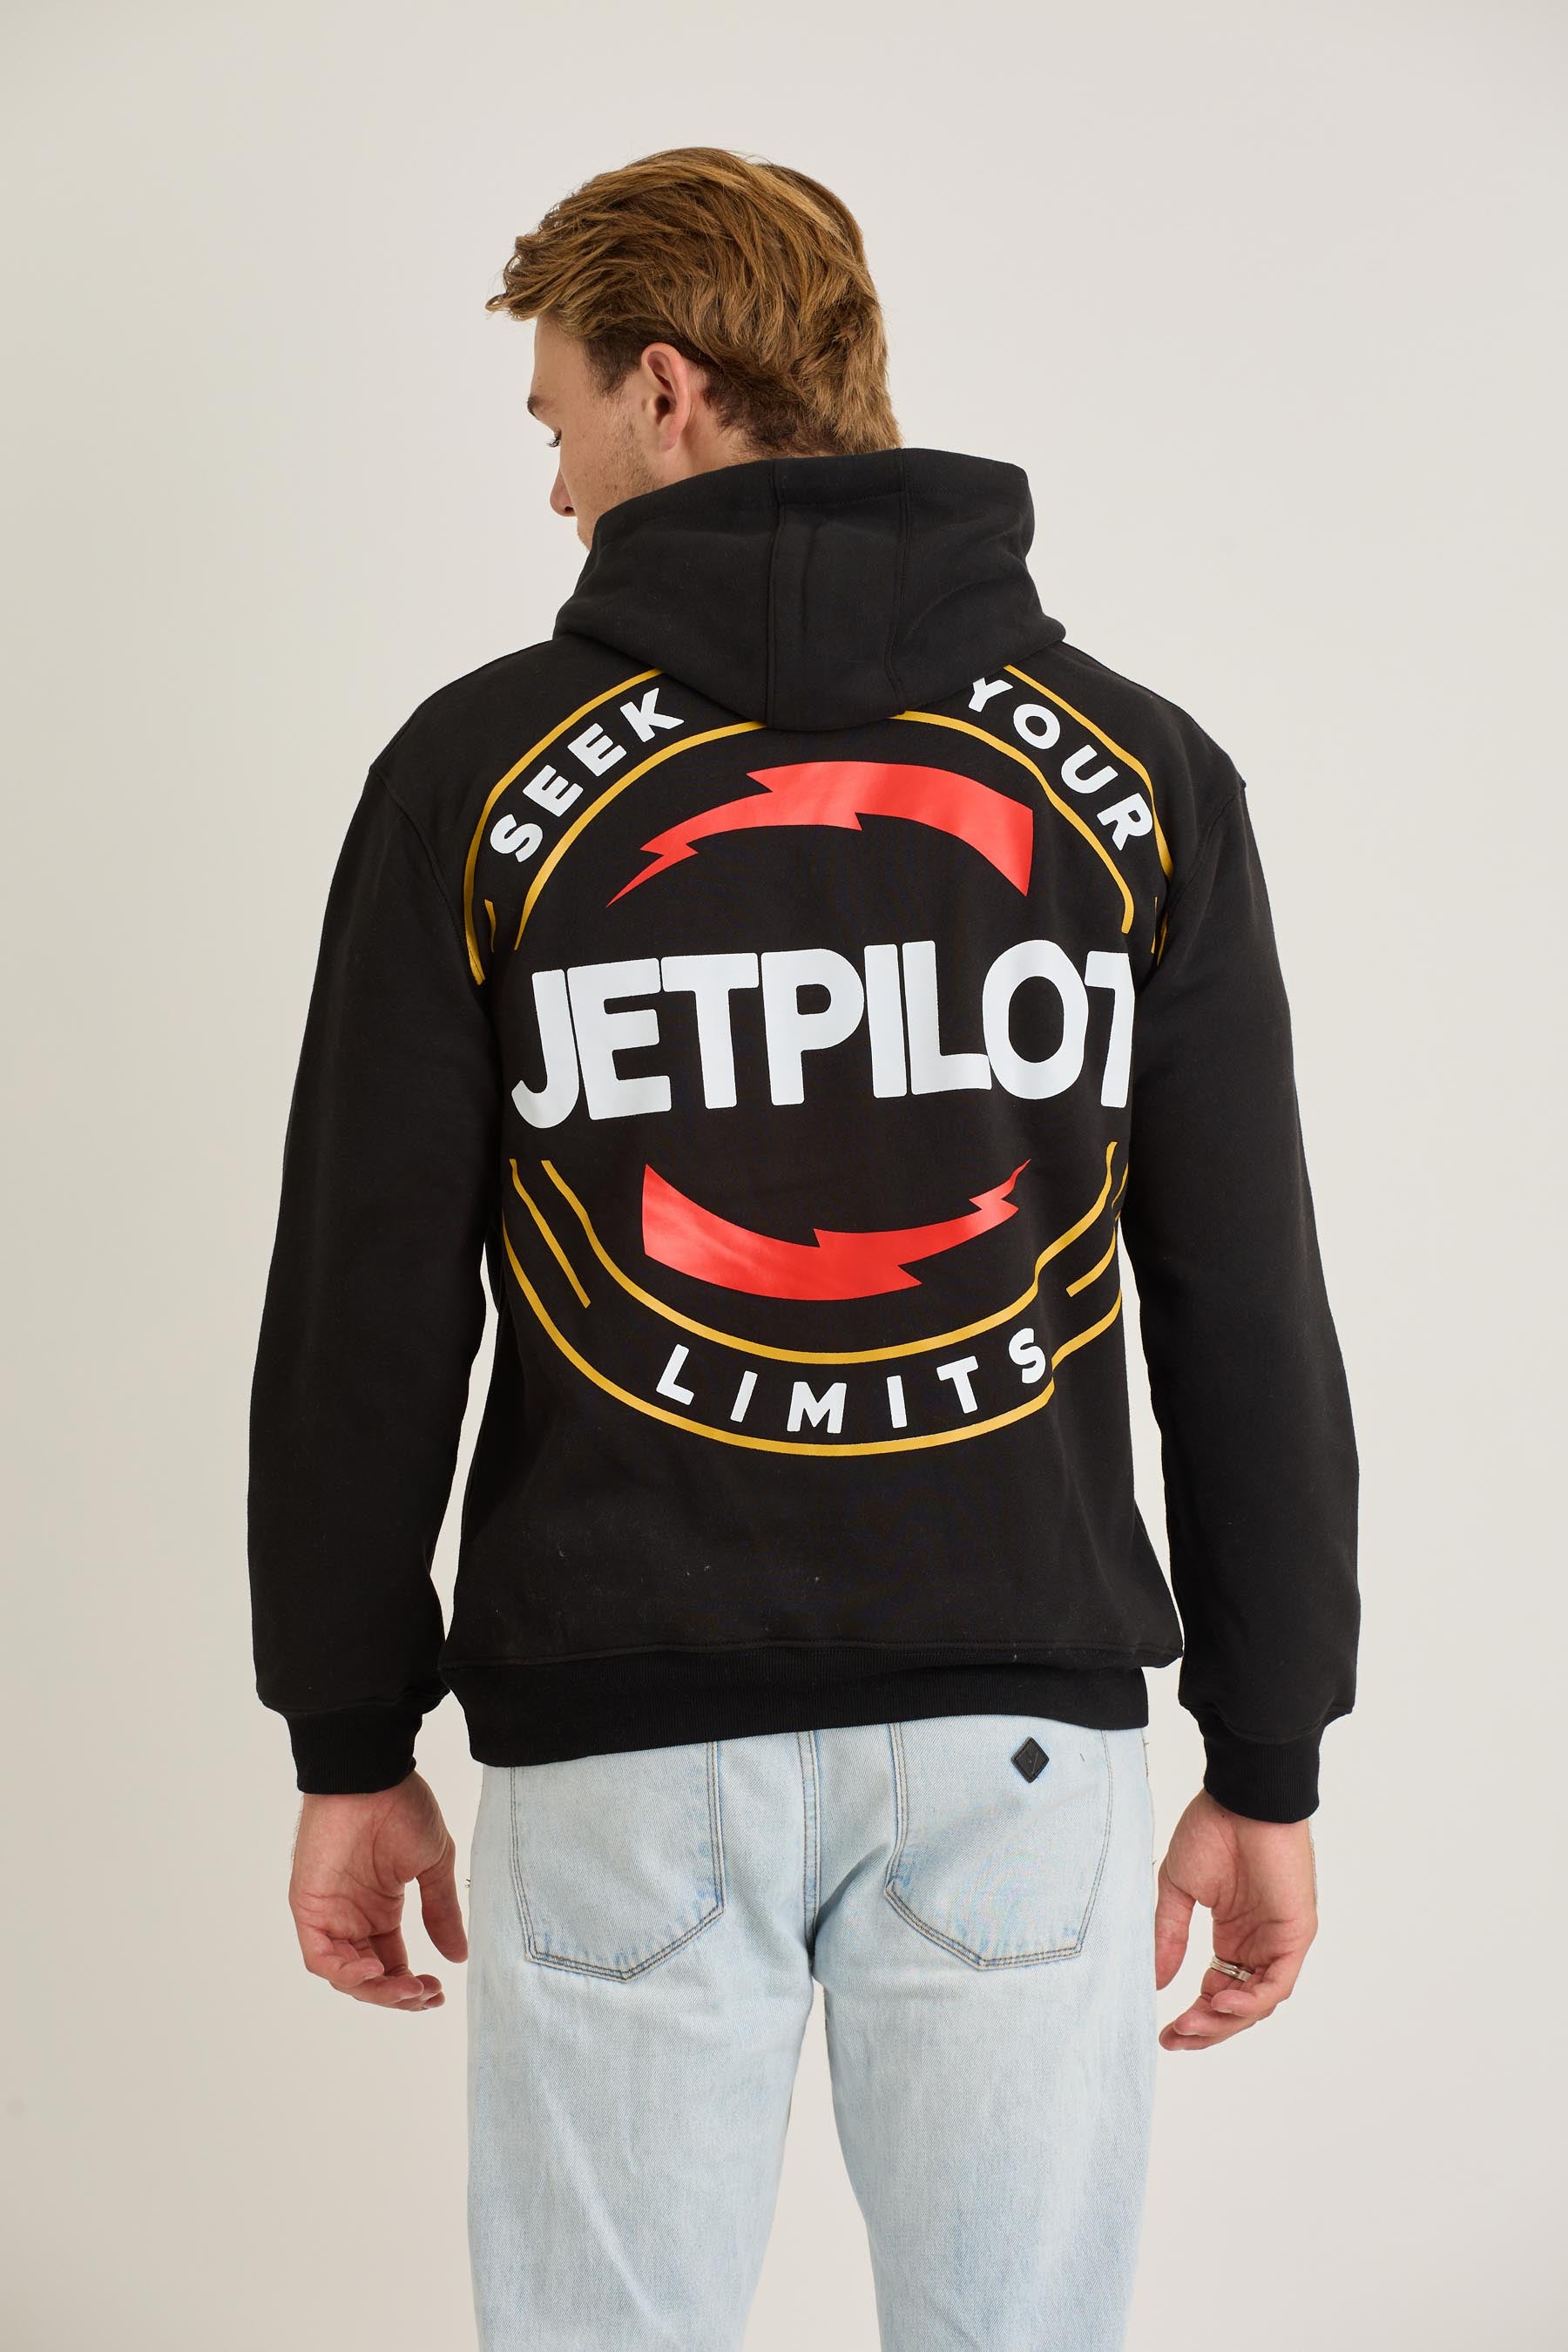 Jetpilot Limits Mens Pullover - Black 2